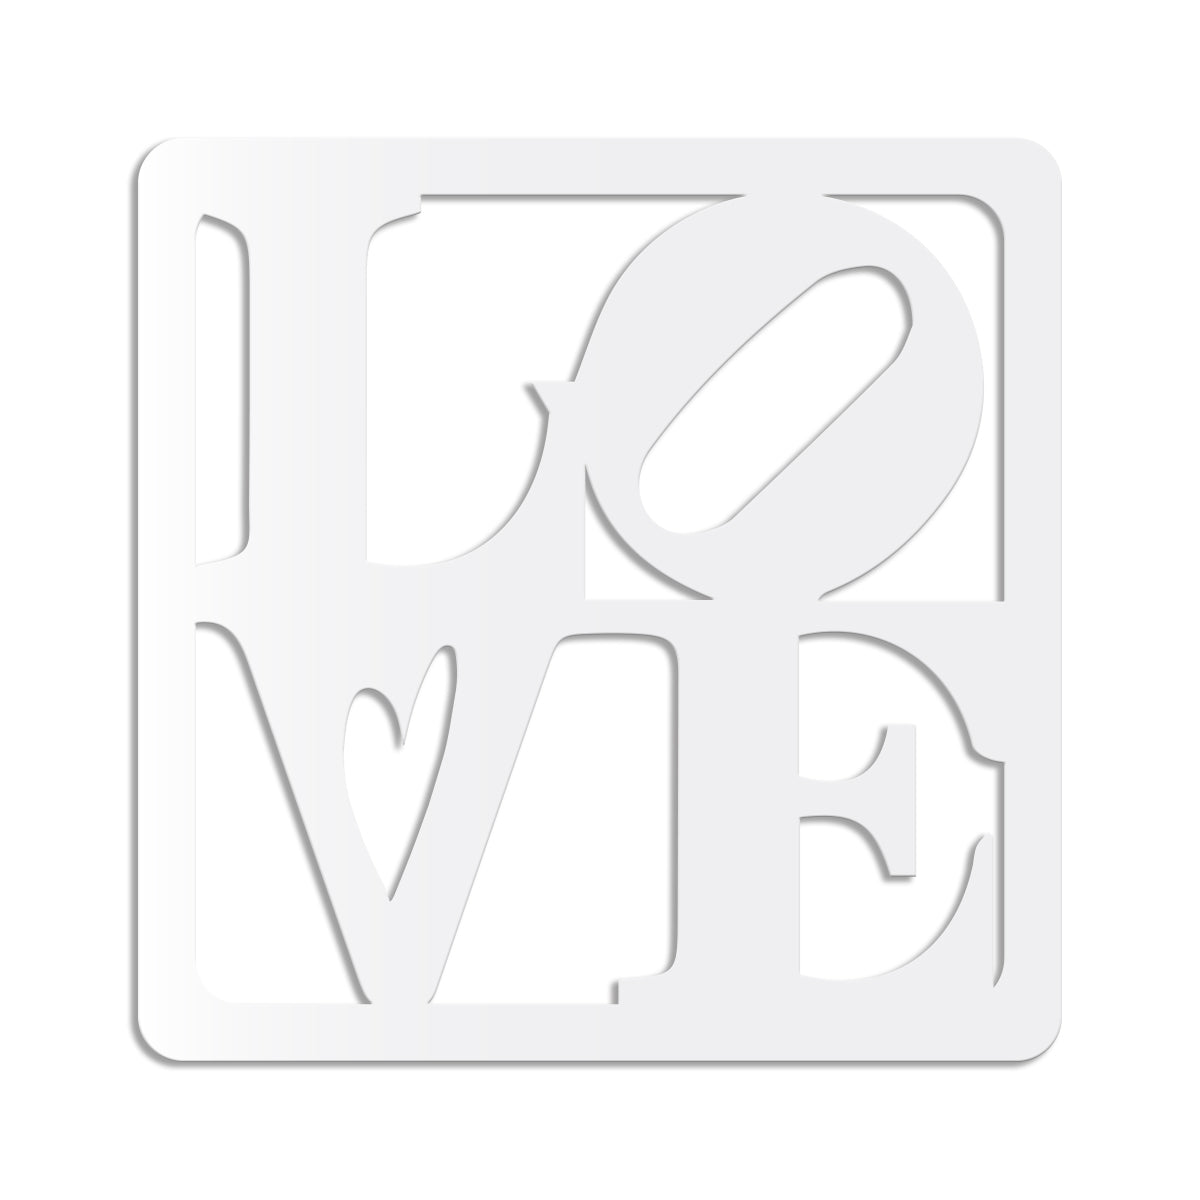 LOVE - Quadro moderno in pvc solido 48 x 48cm - PlastiWood